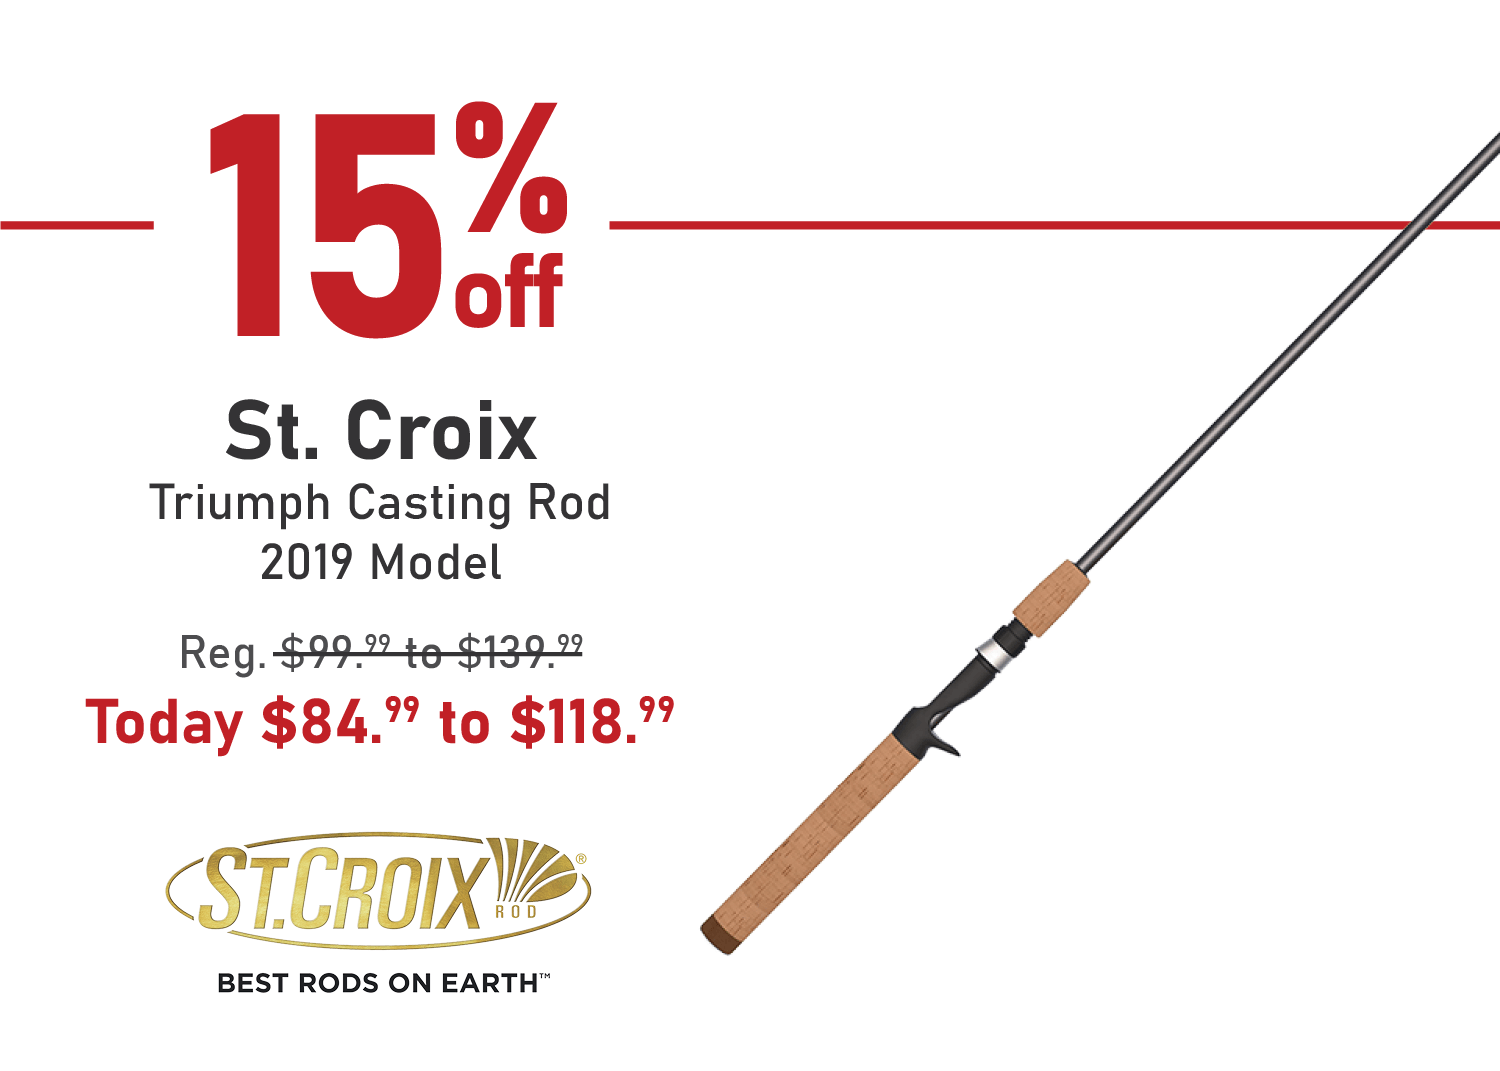 Save 15% on the St. Croix Triumph Casting Rod - 2019 Model